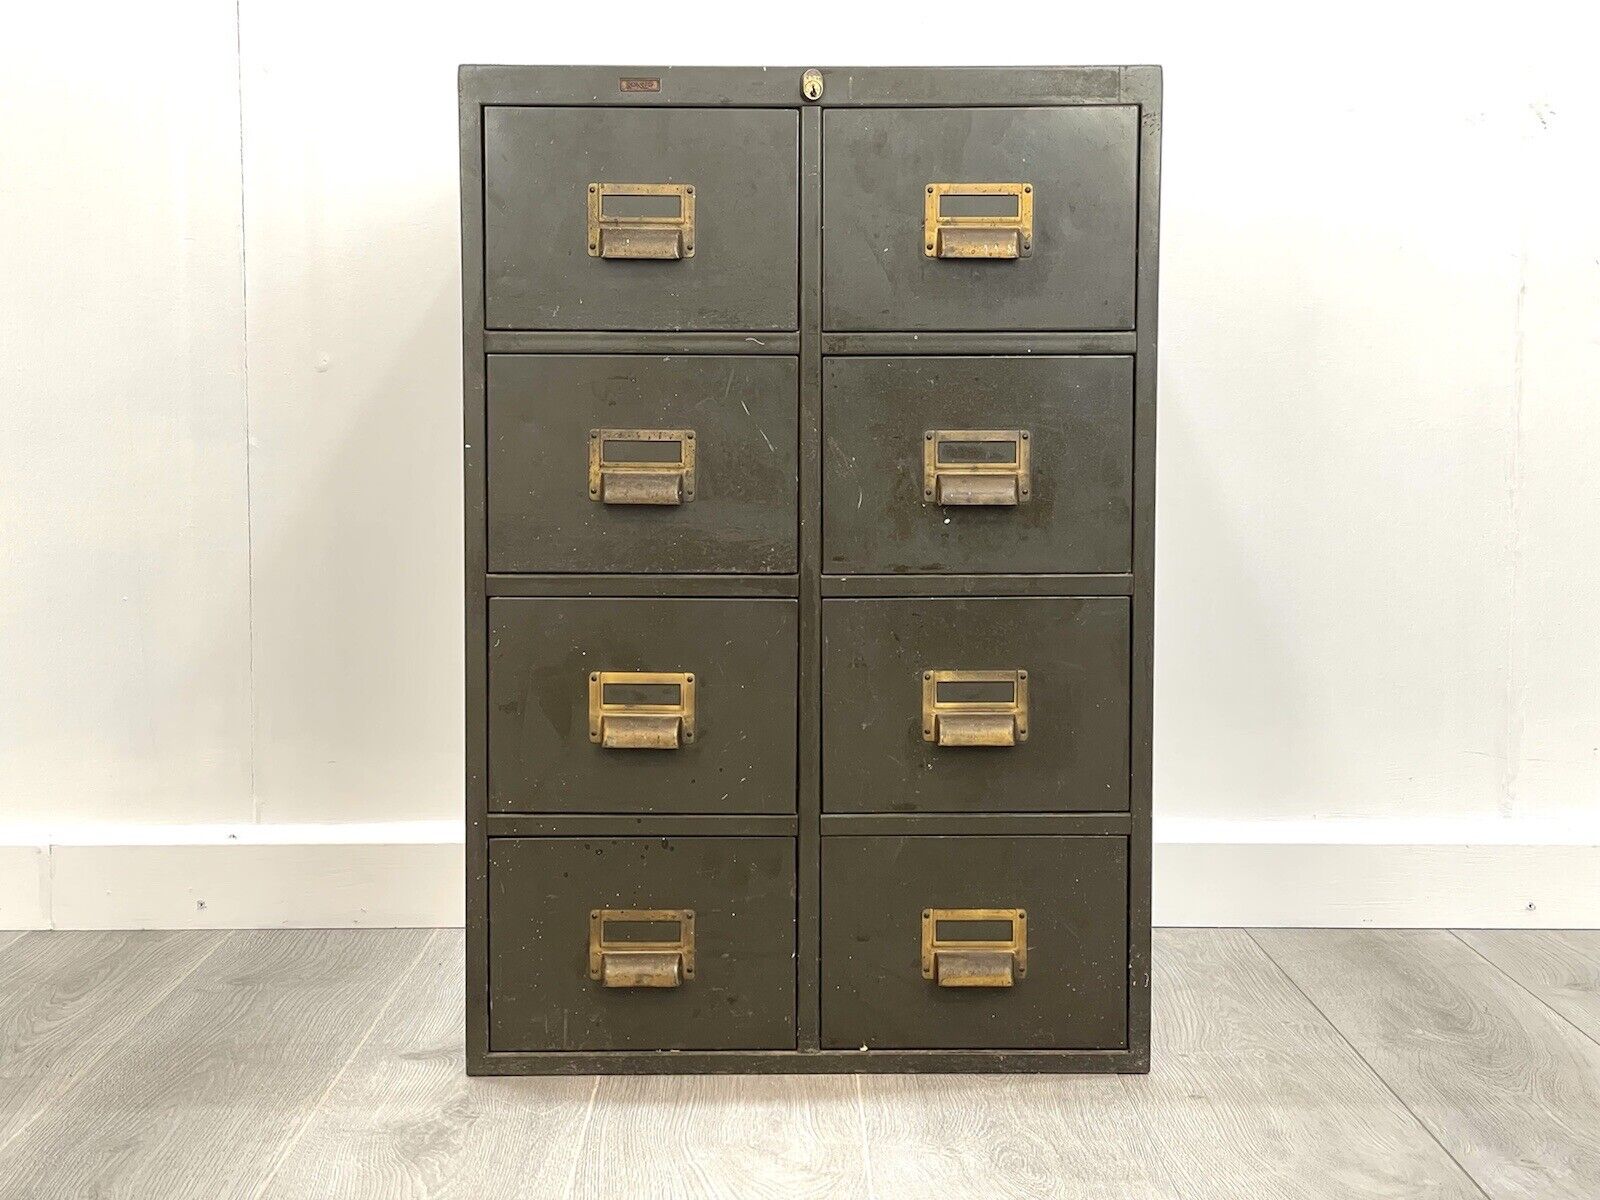 Roneo, Vintage 8 Drawer Filing / Index Cabinet in Dark Green